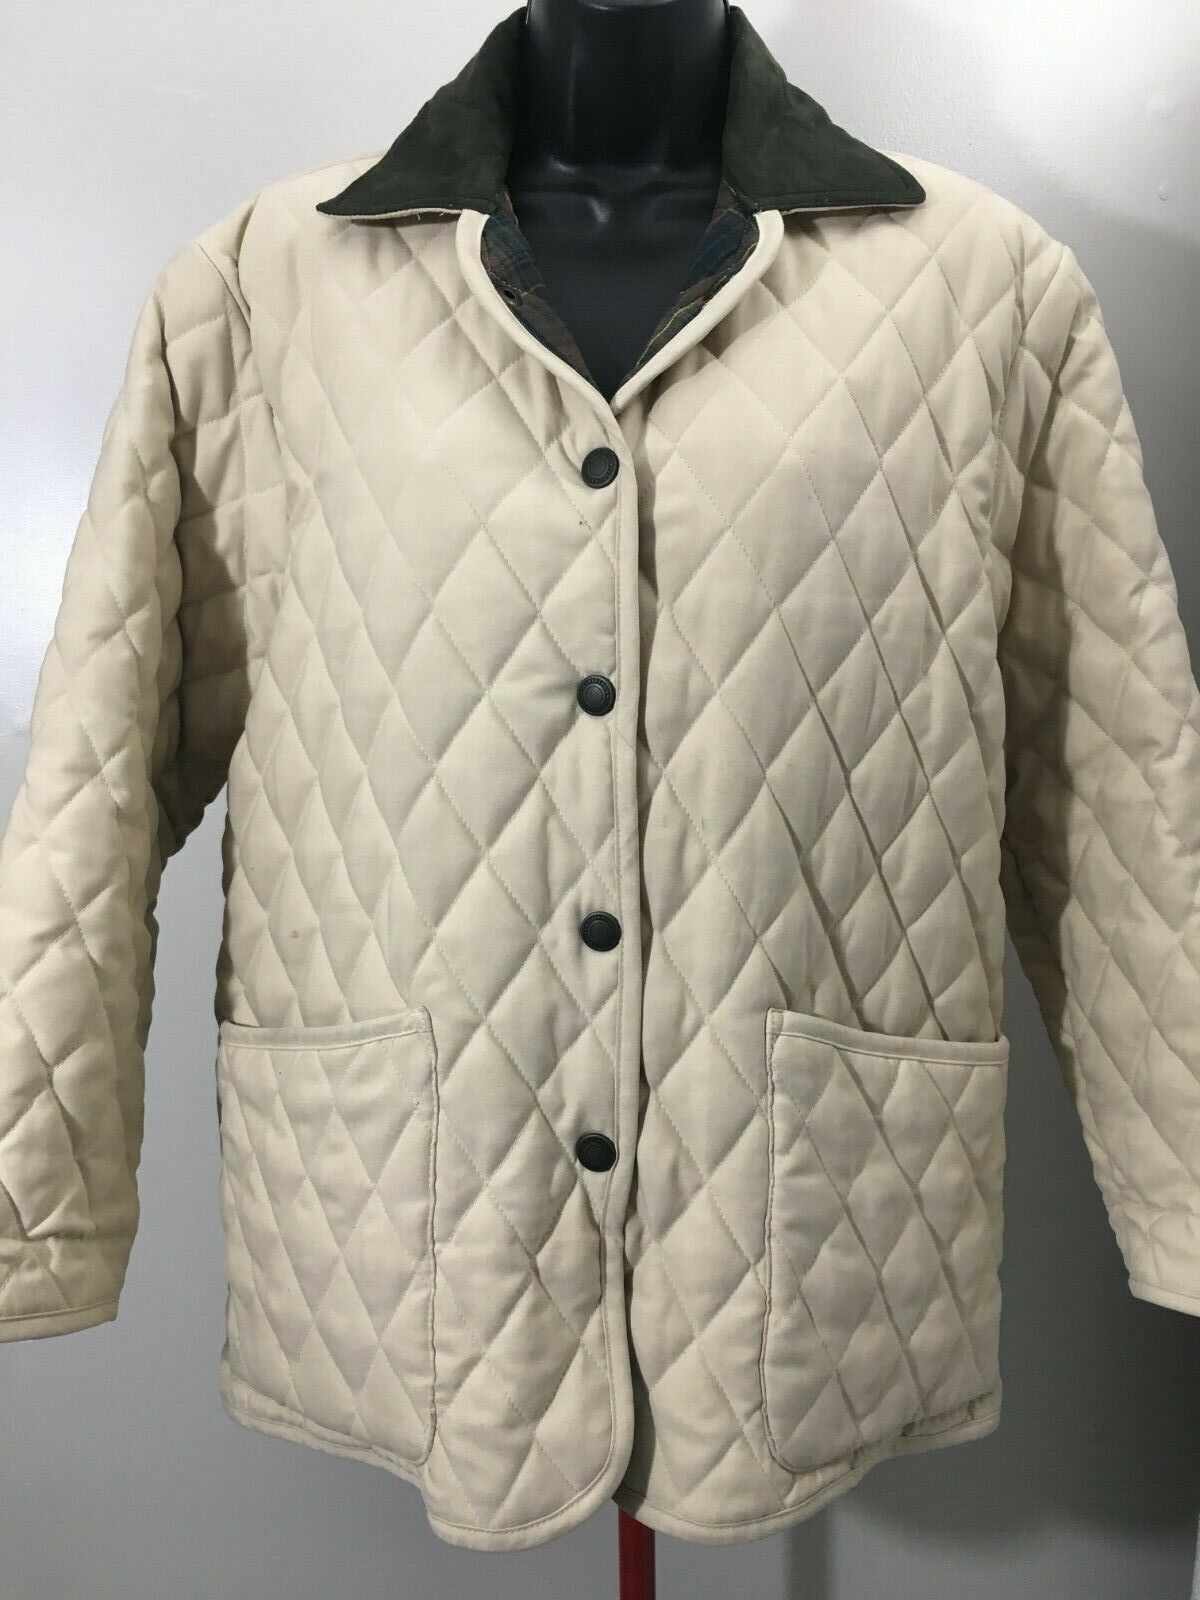 John Partridge Women's Quilted Jacket in Ivory, Size XS | eBay